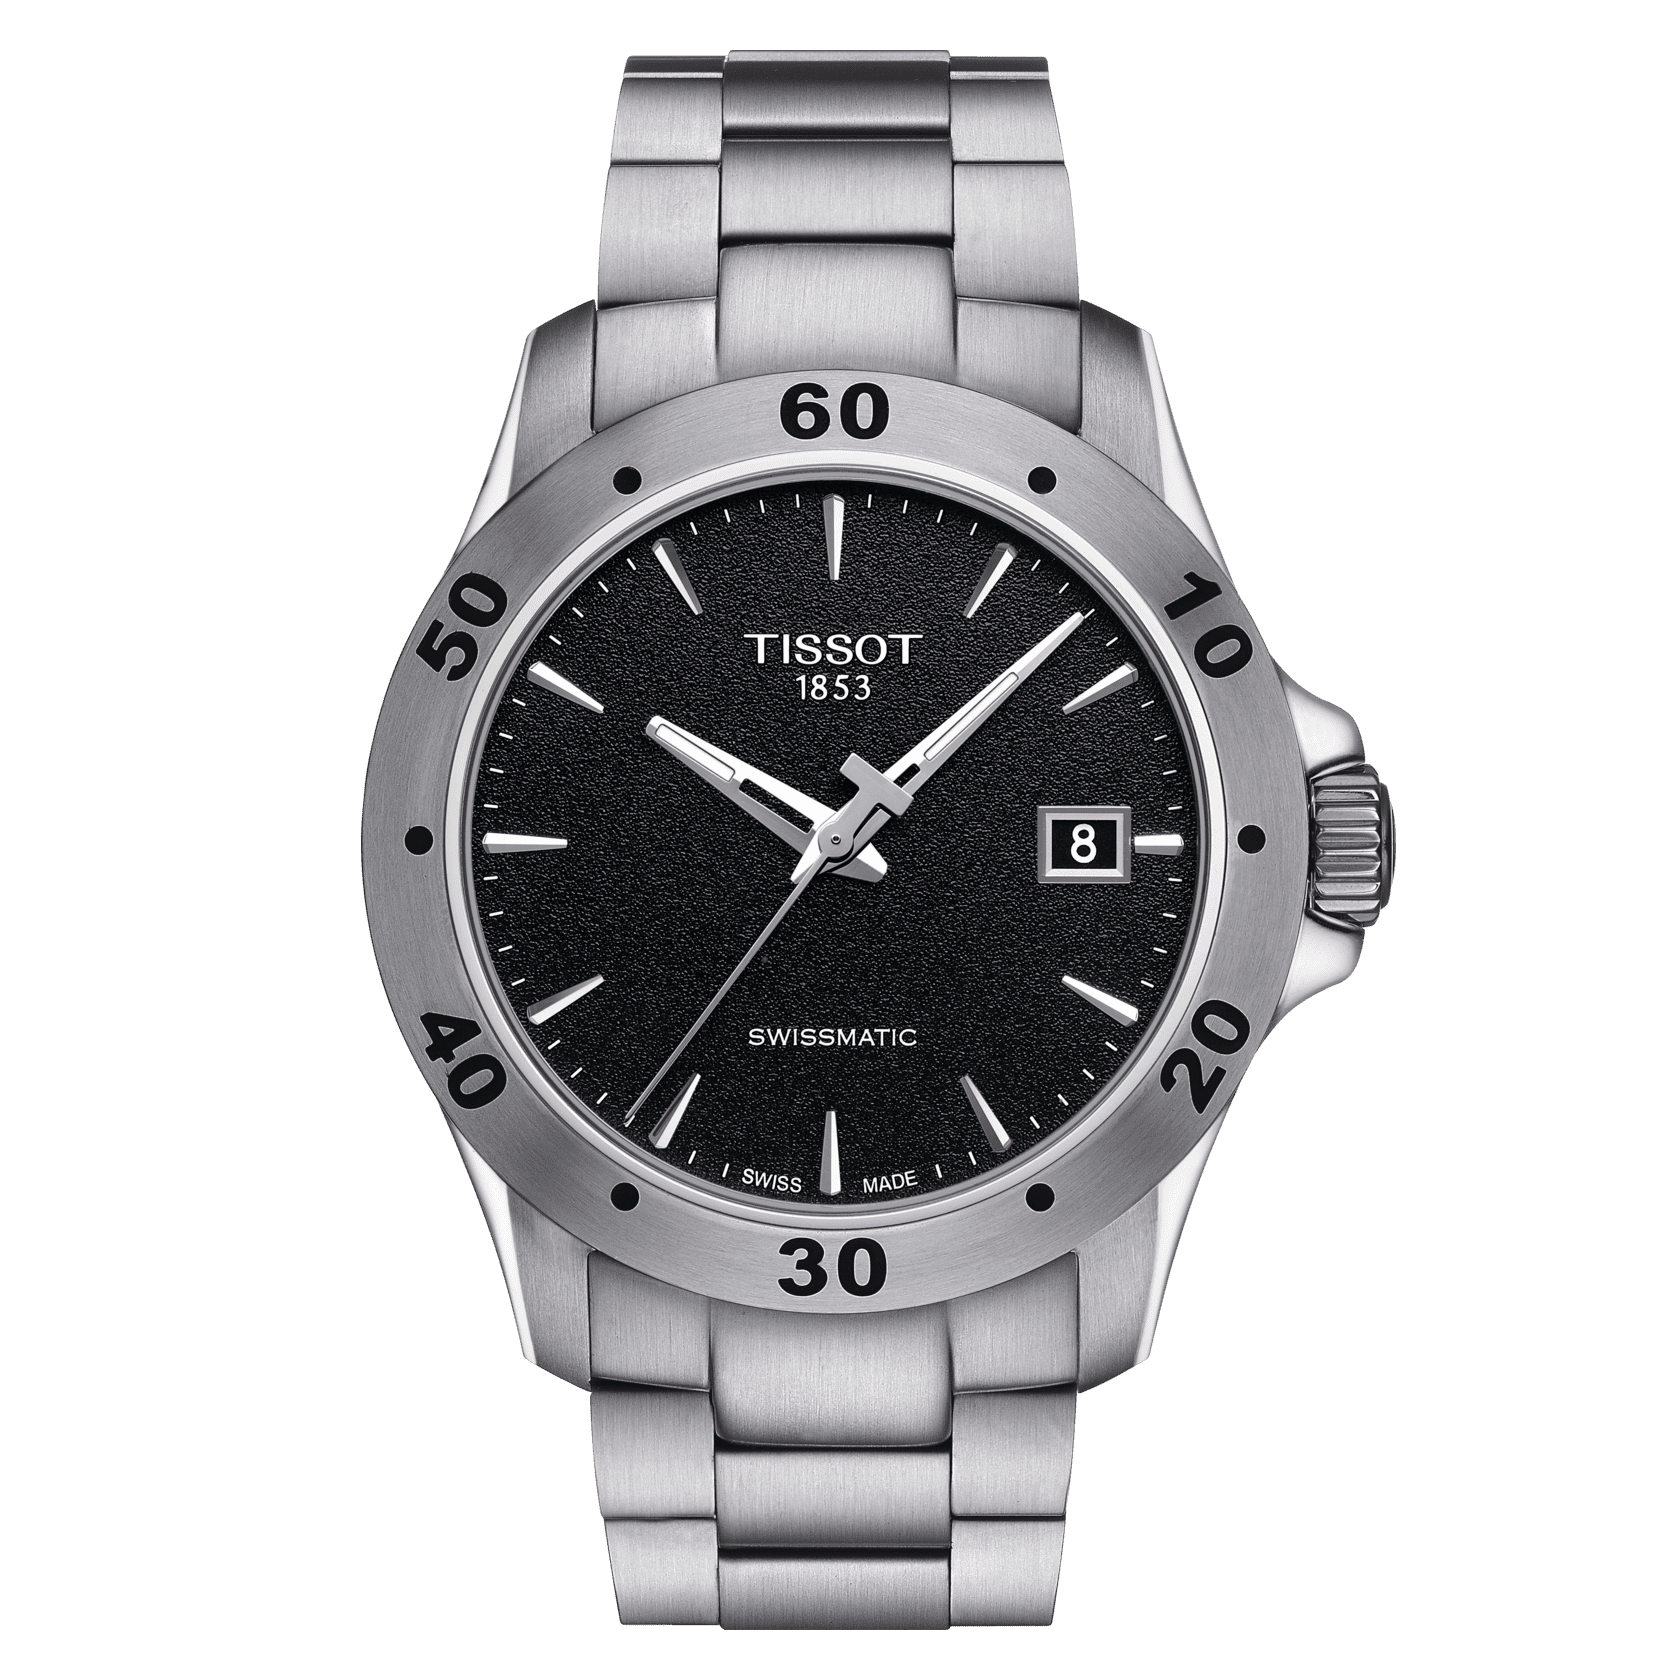 Perfect Fake Rolex Watch